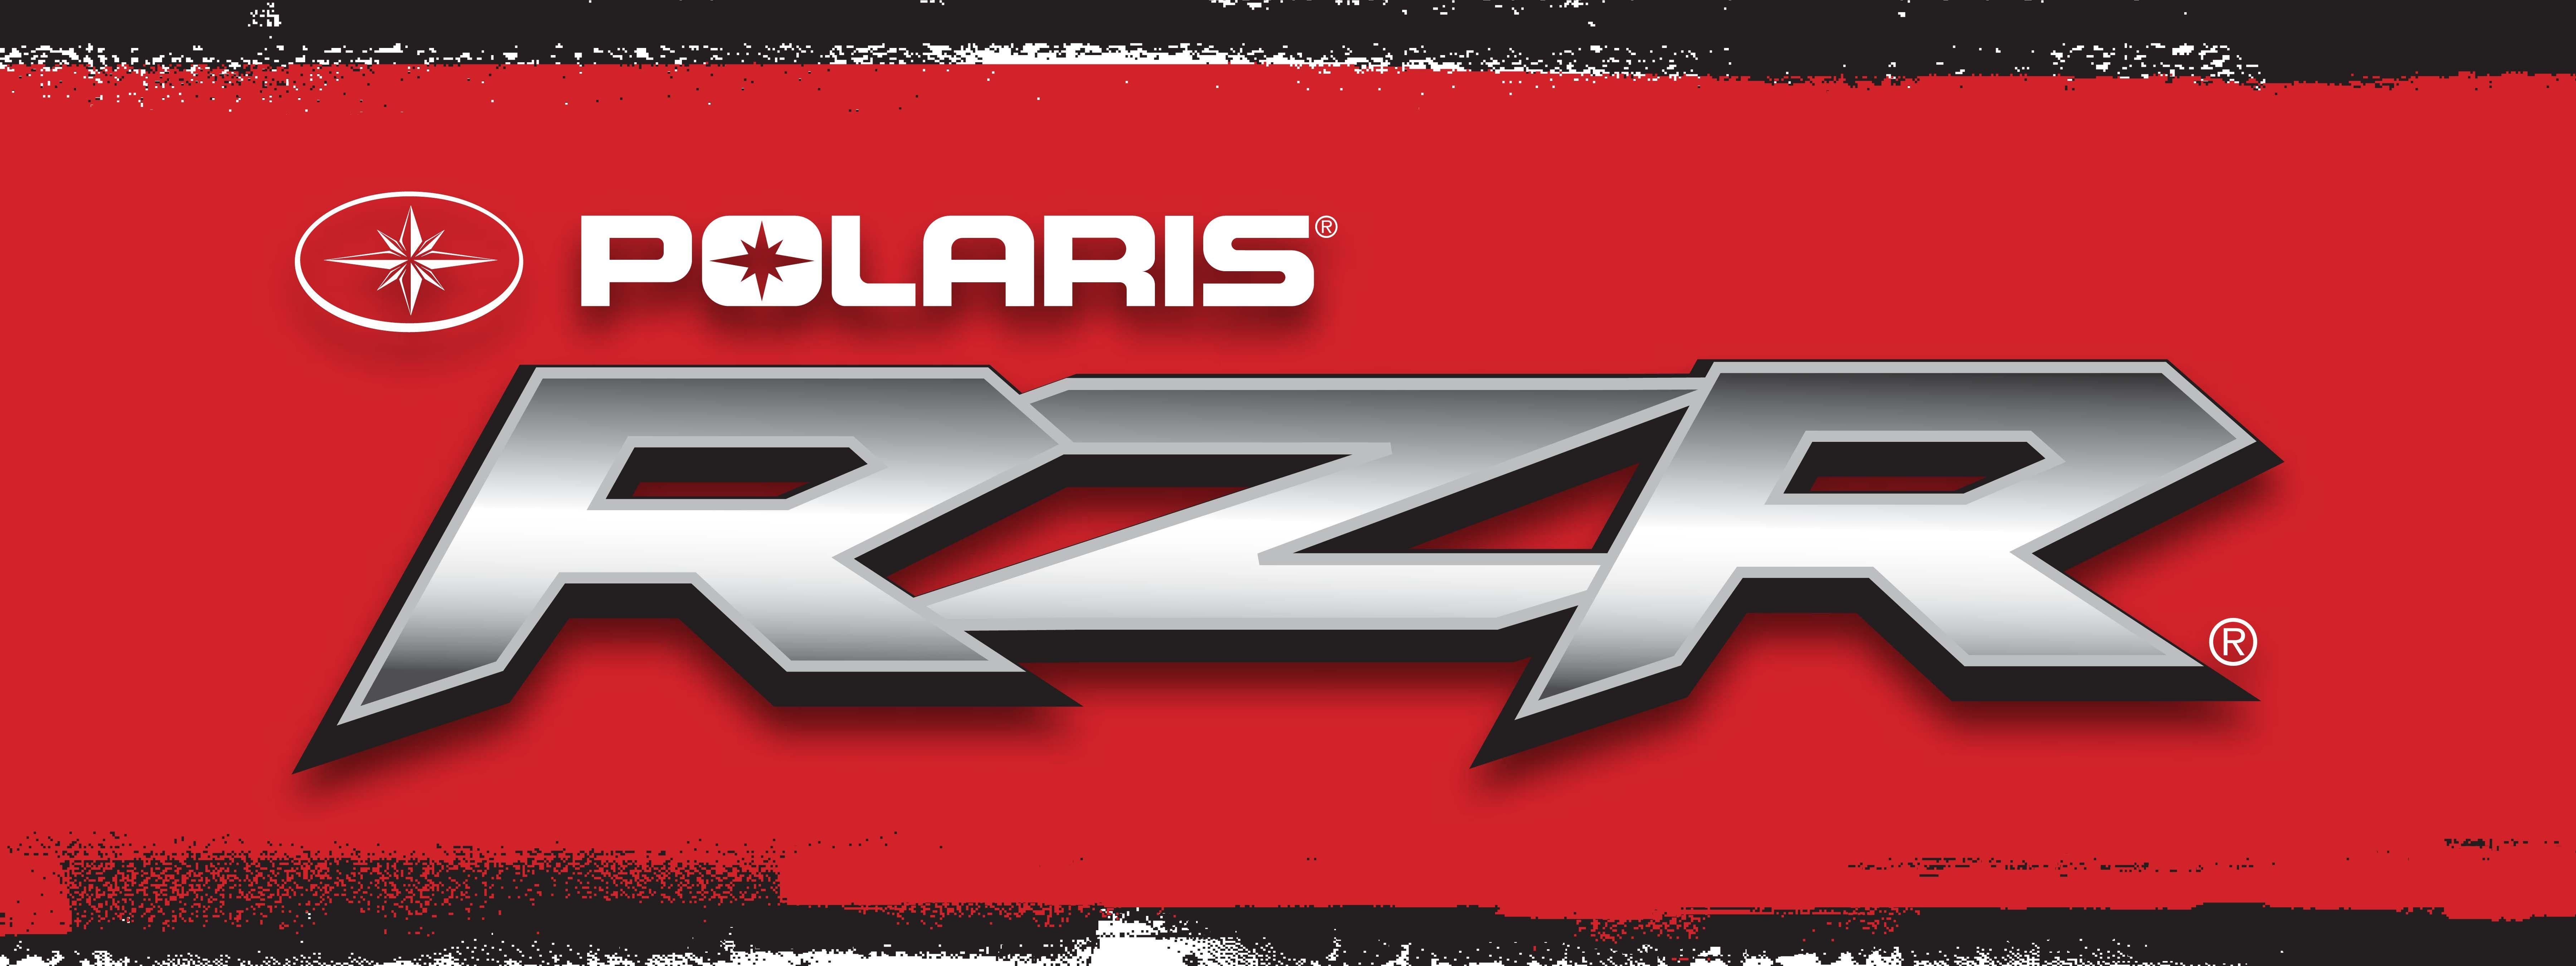 RZR Logo - polaris-rzr-logo-tag-walts-outdoor-center - Autobot India